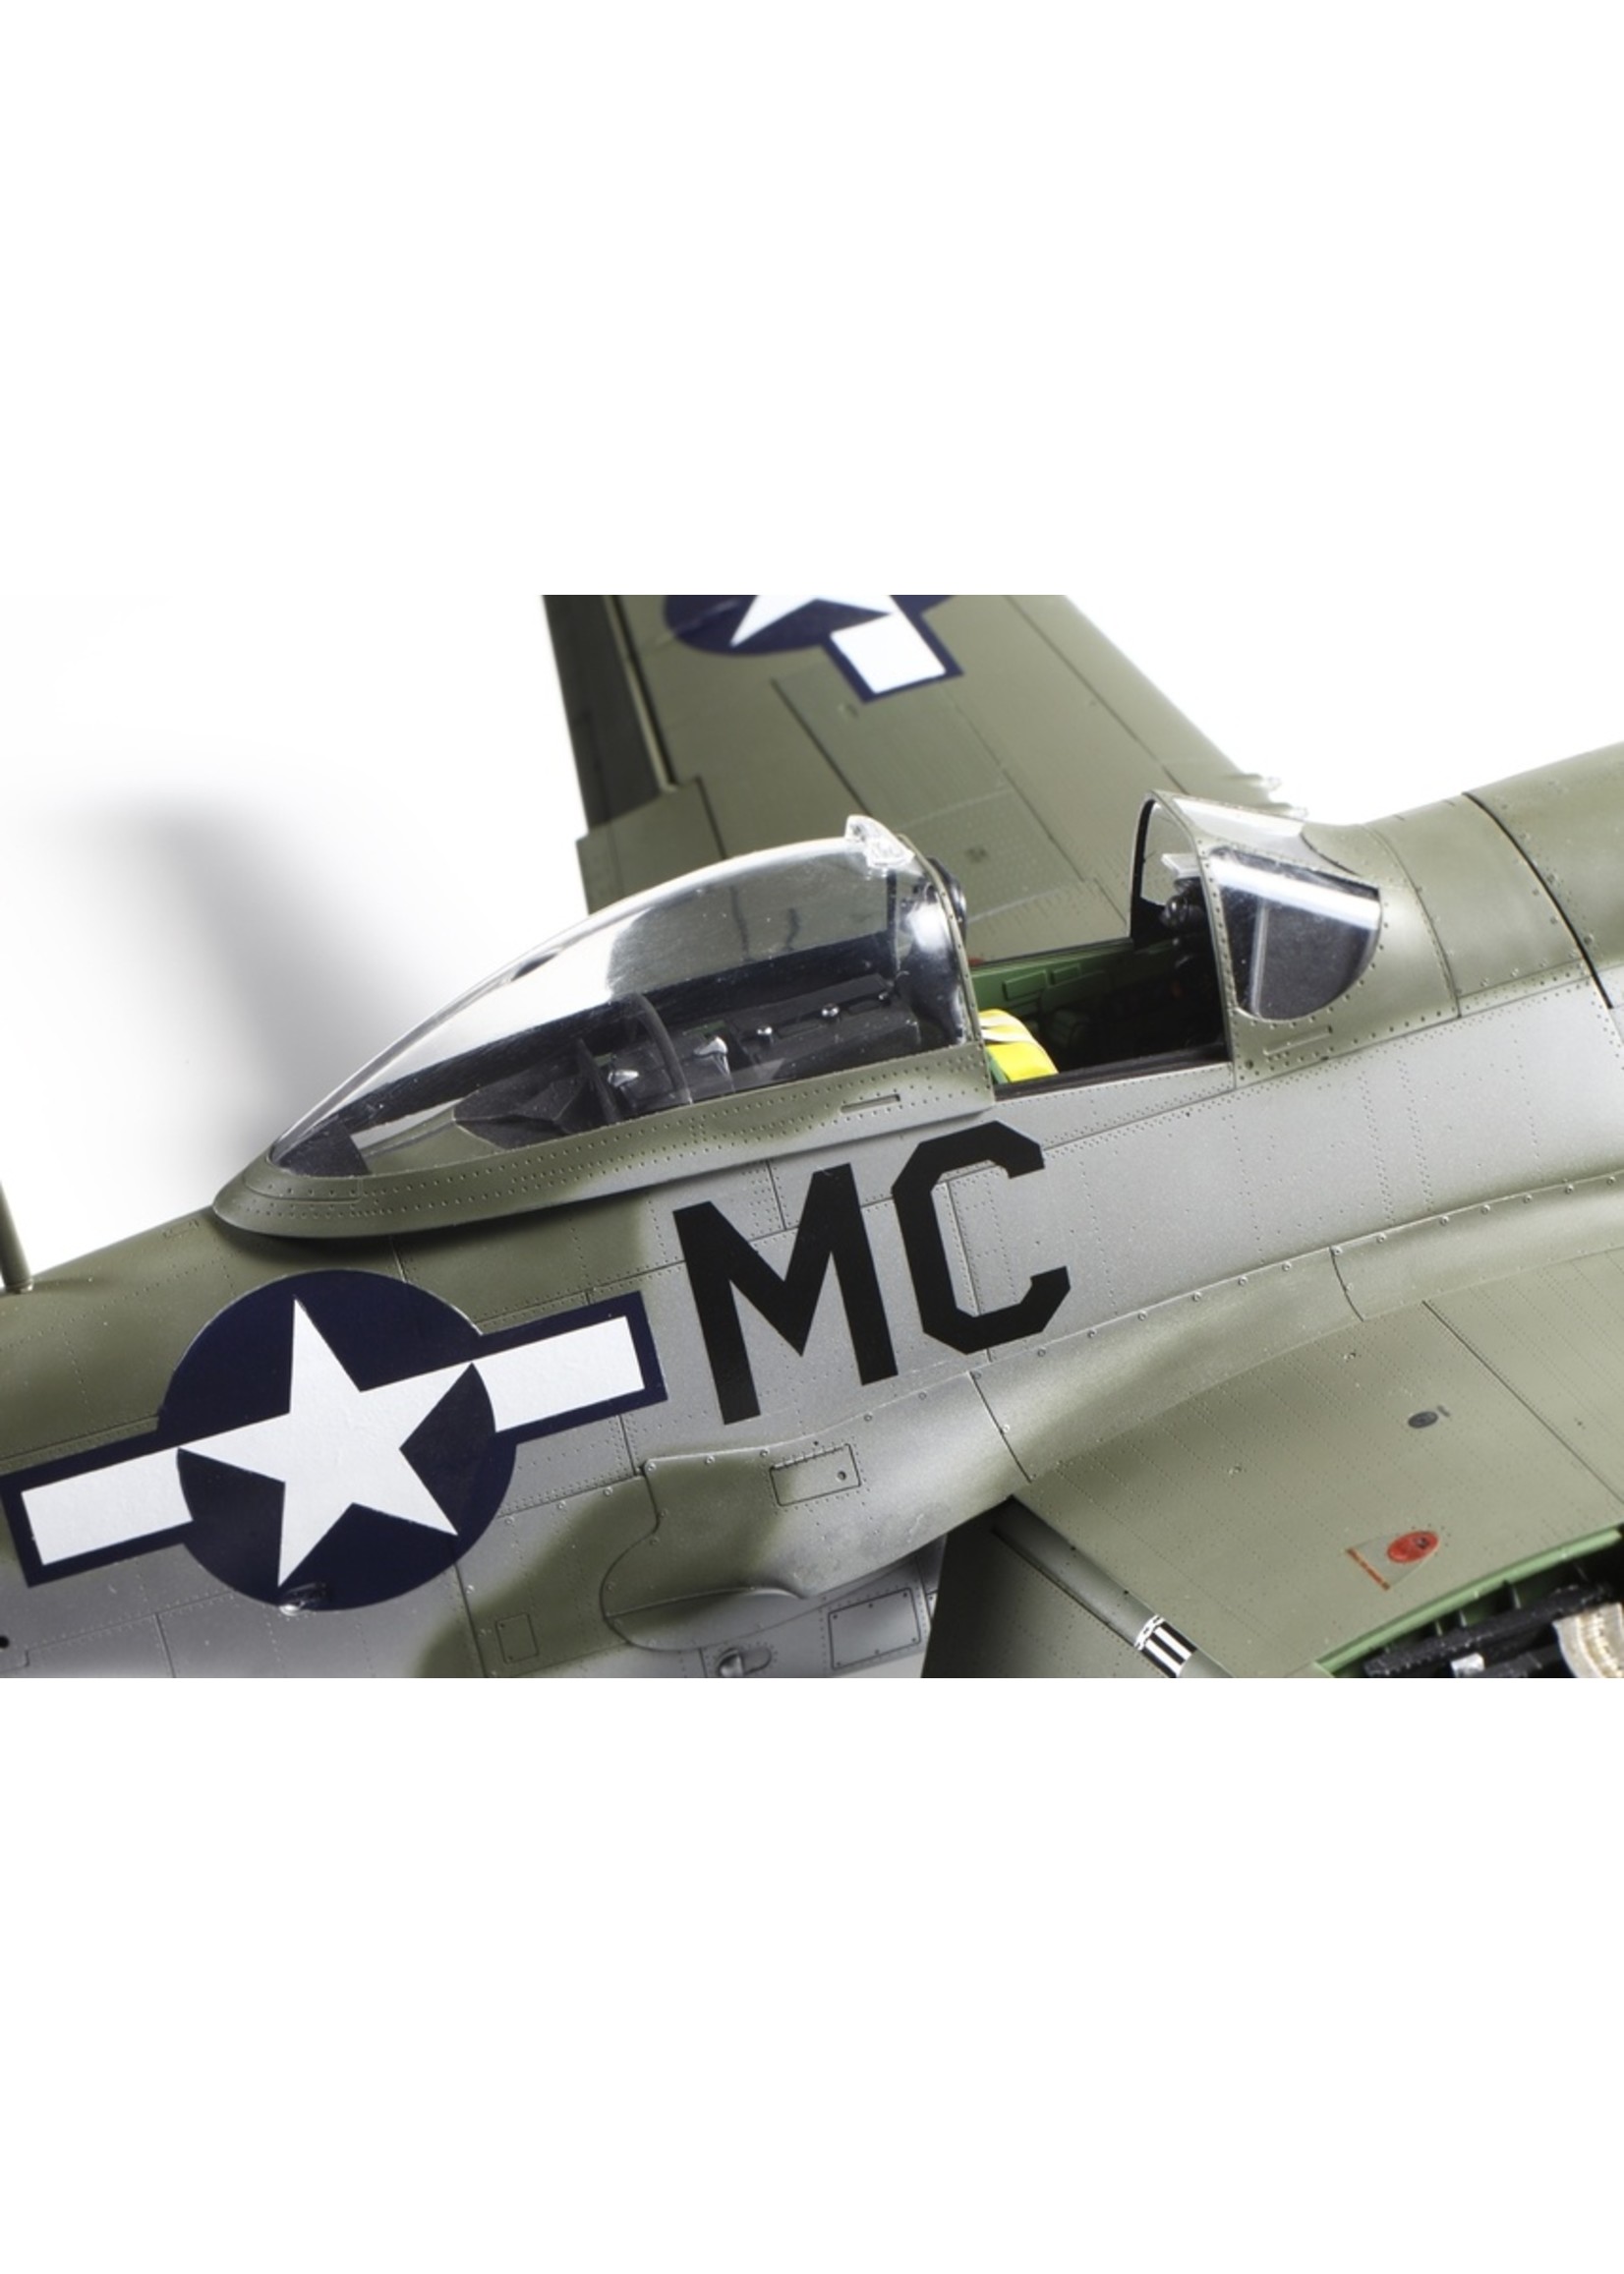 1:48 Scale Tamiya North American P-51D Mustang Plane Model Kit